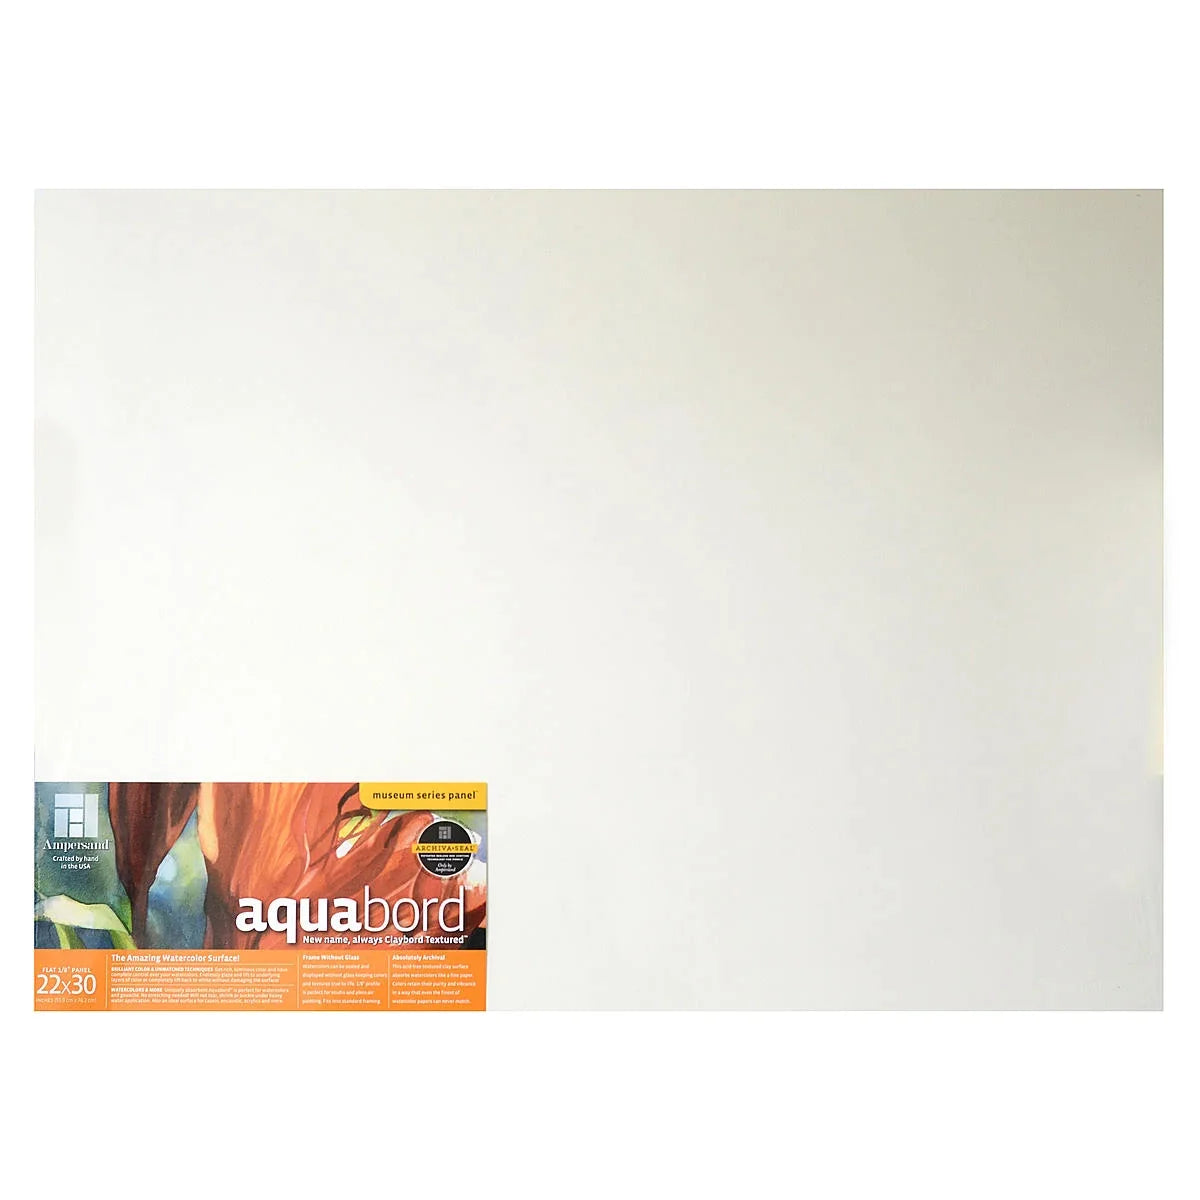 Ampersand Aquabord - 1/8th Inch Flat Artist Panel